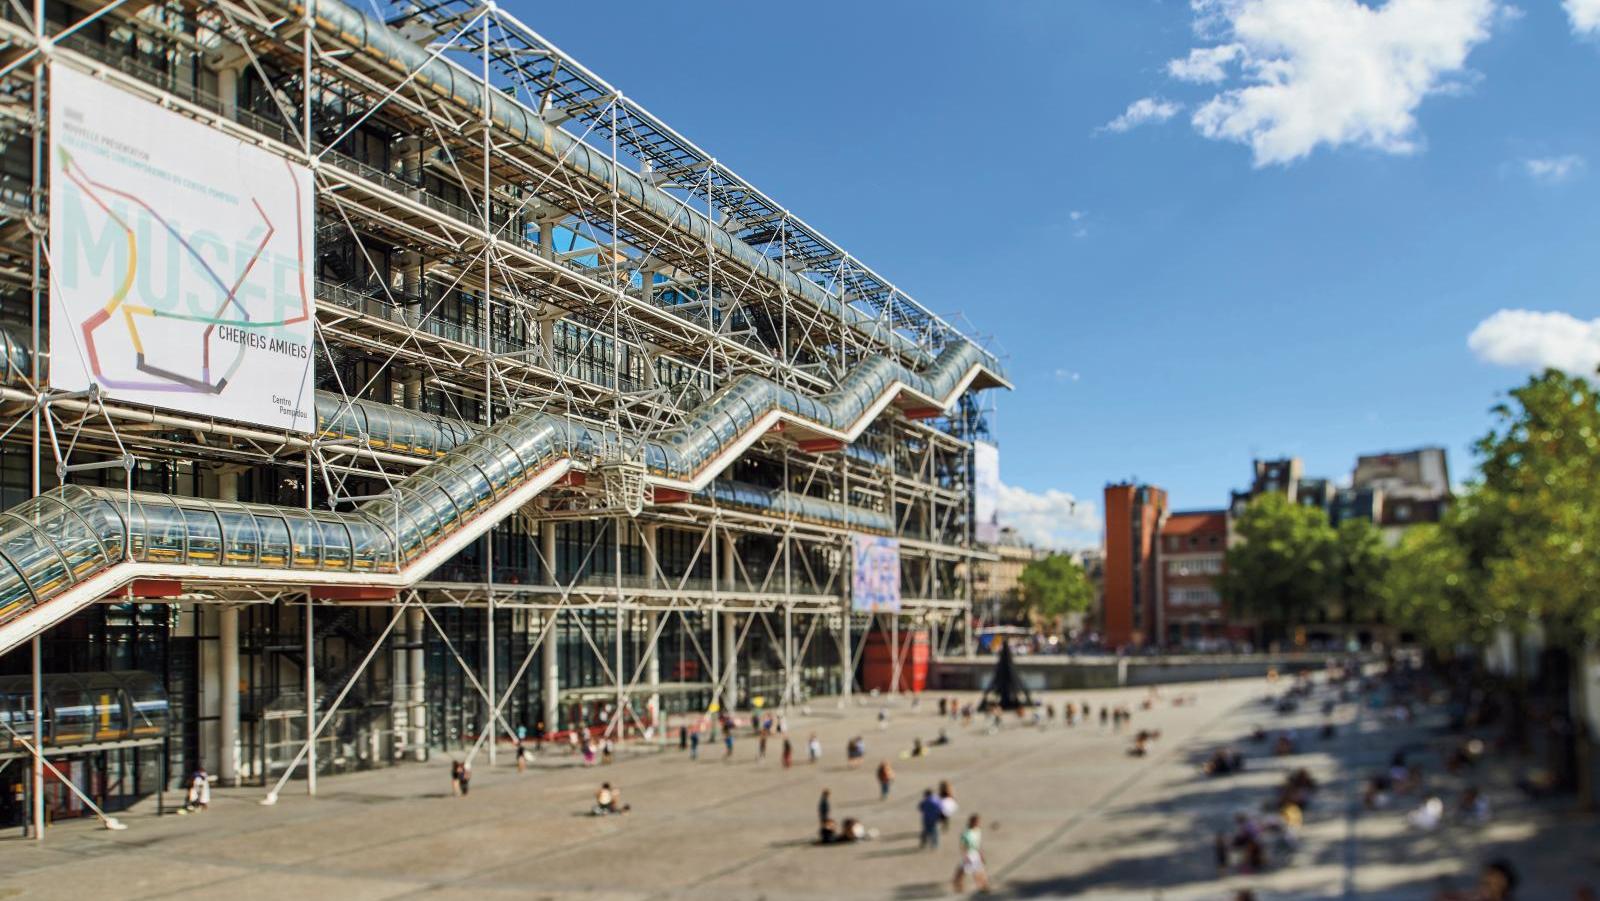 Centre Pompidou, Paris. Pompidou Goes International